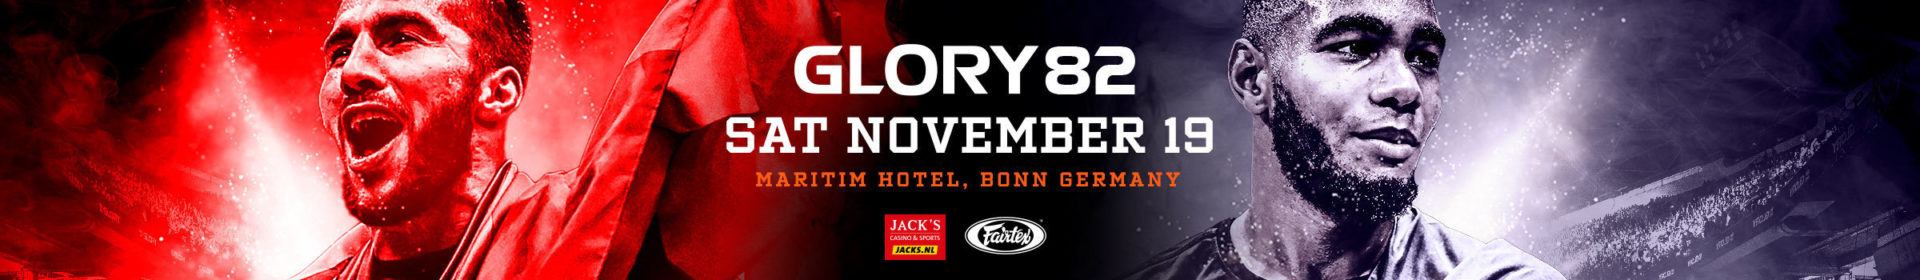 Glory Bonn - Glory 82